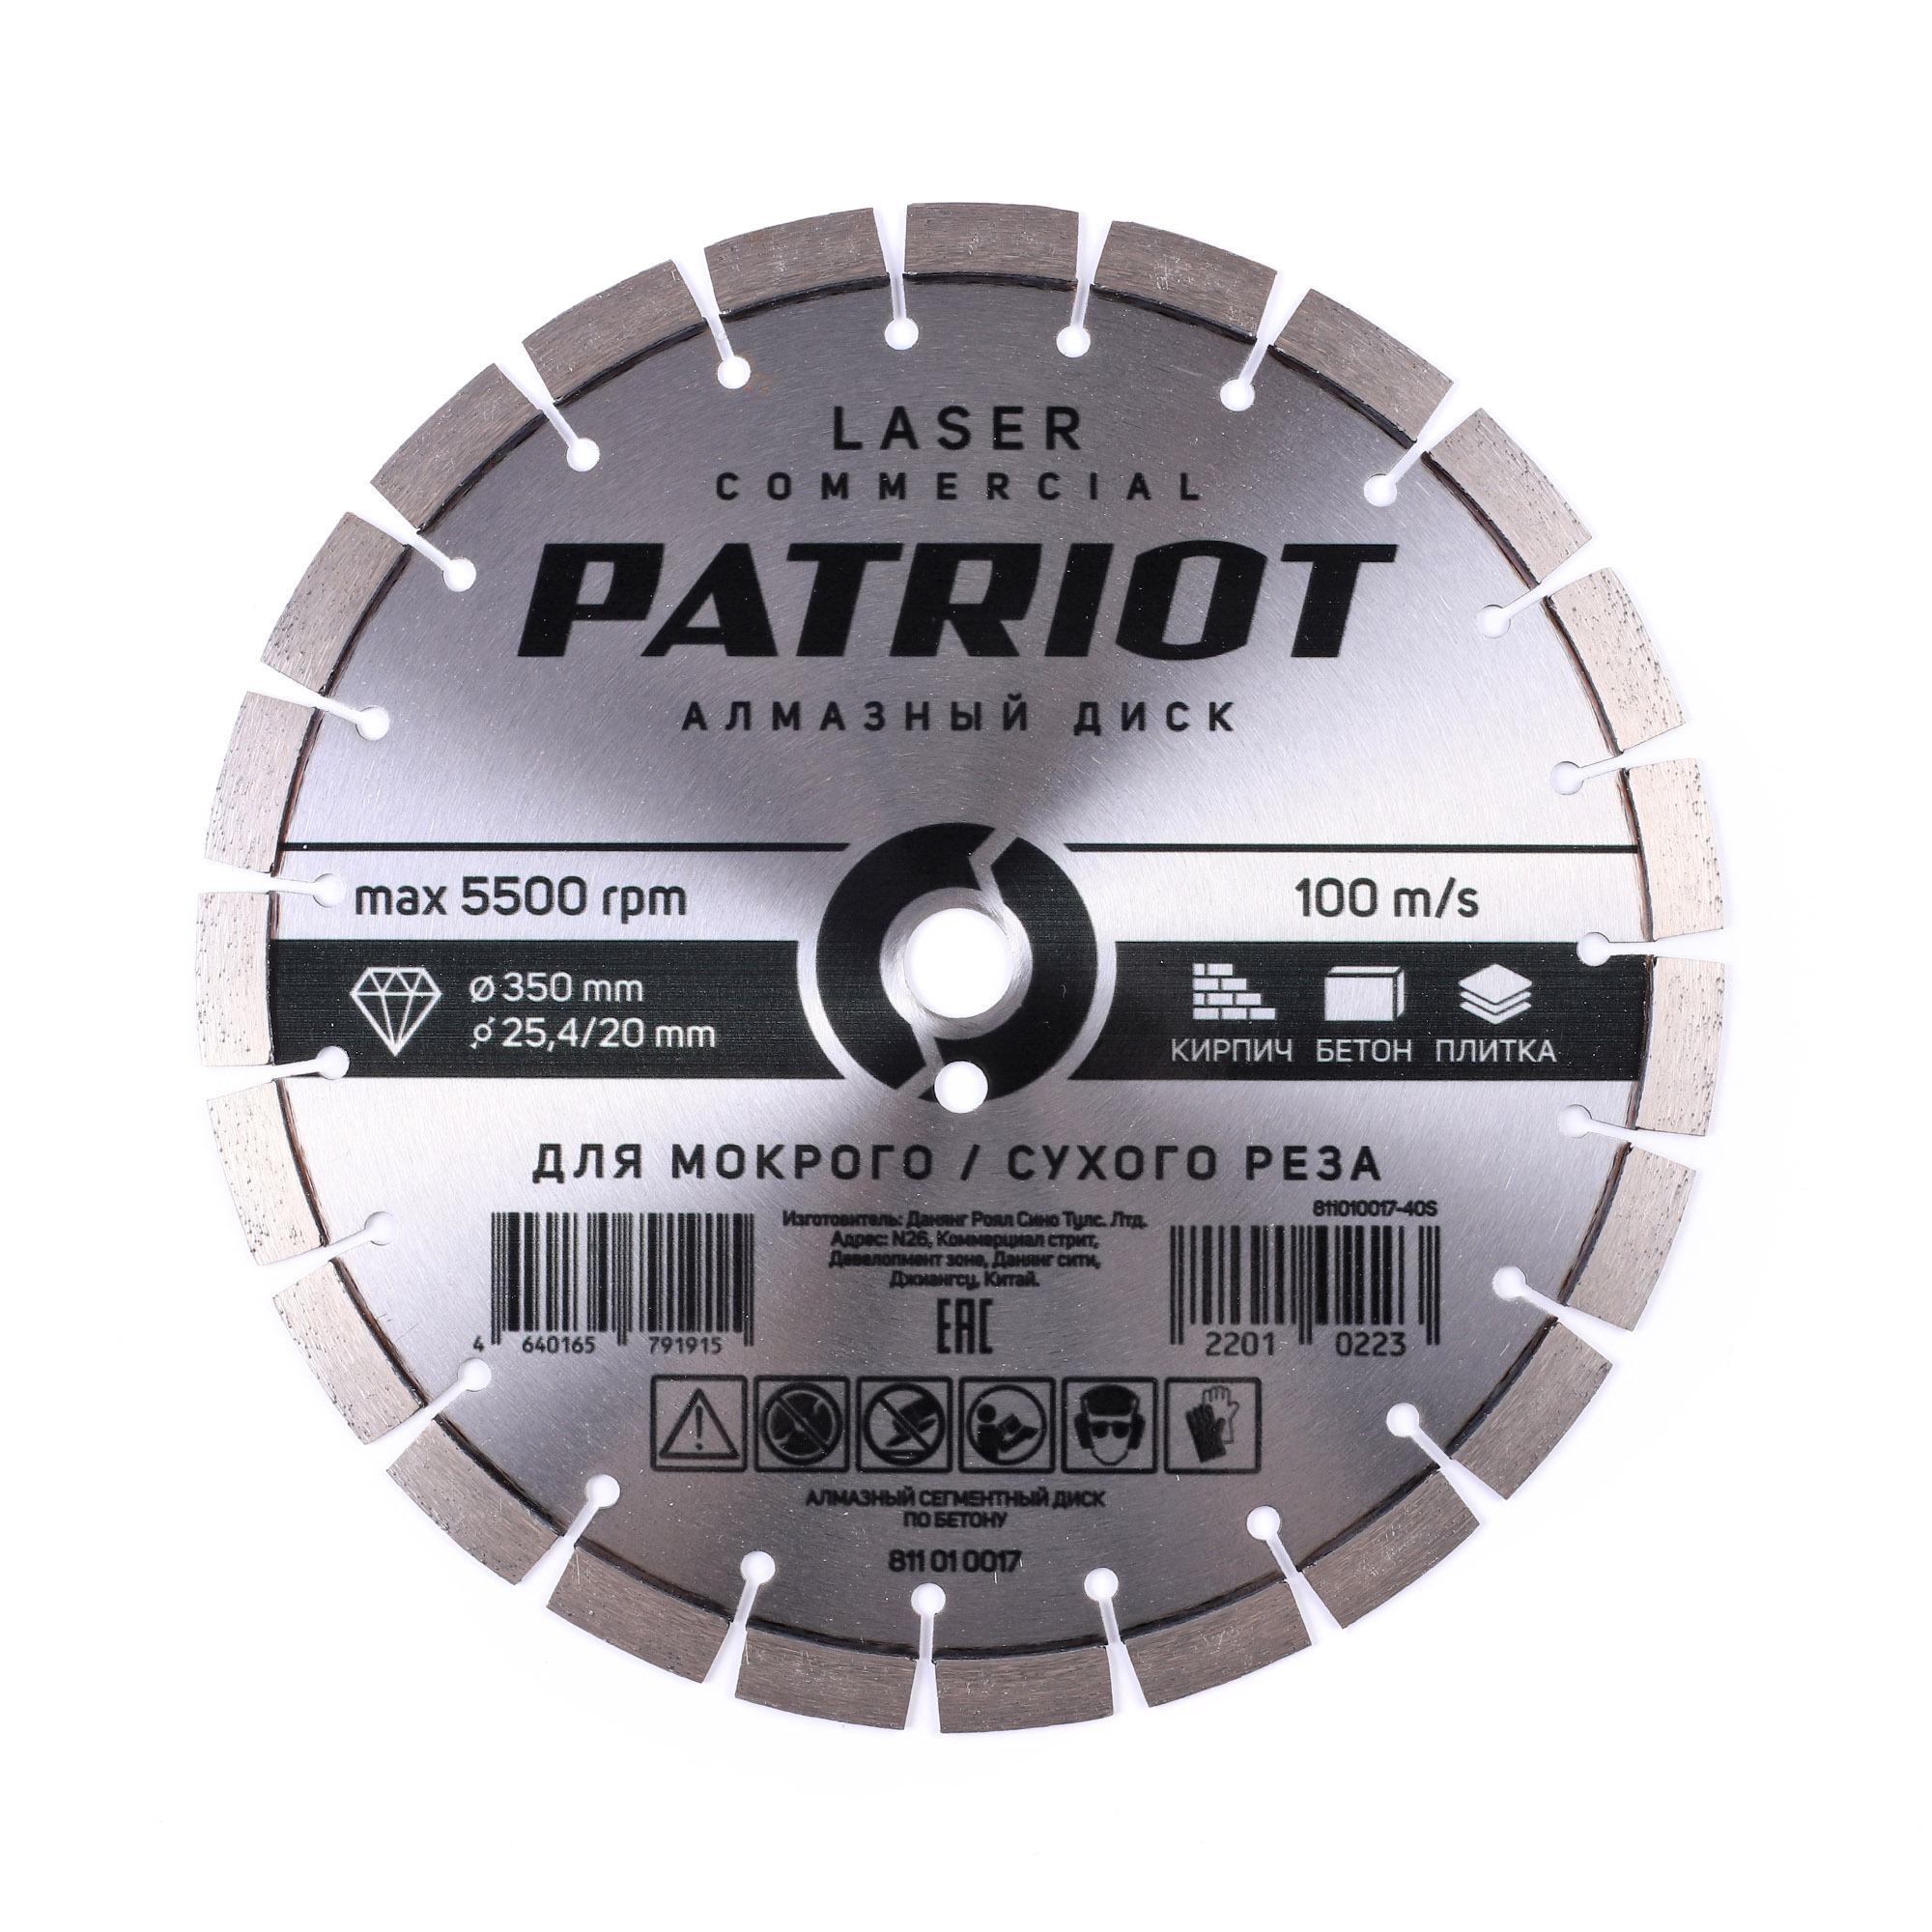 Диск PATRIOT Laser Commercial 811010017 по бетону, 350мм